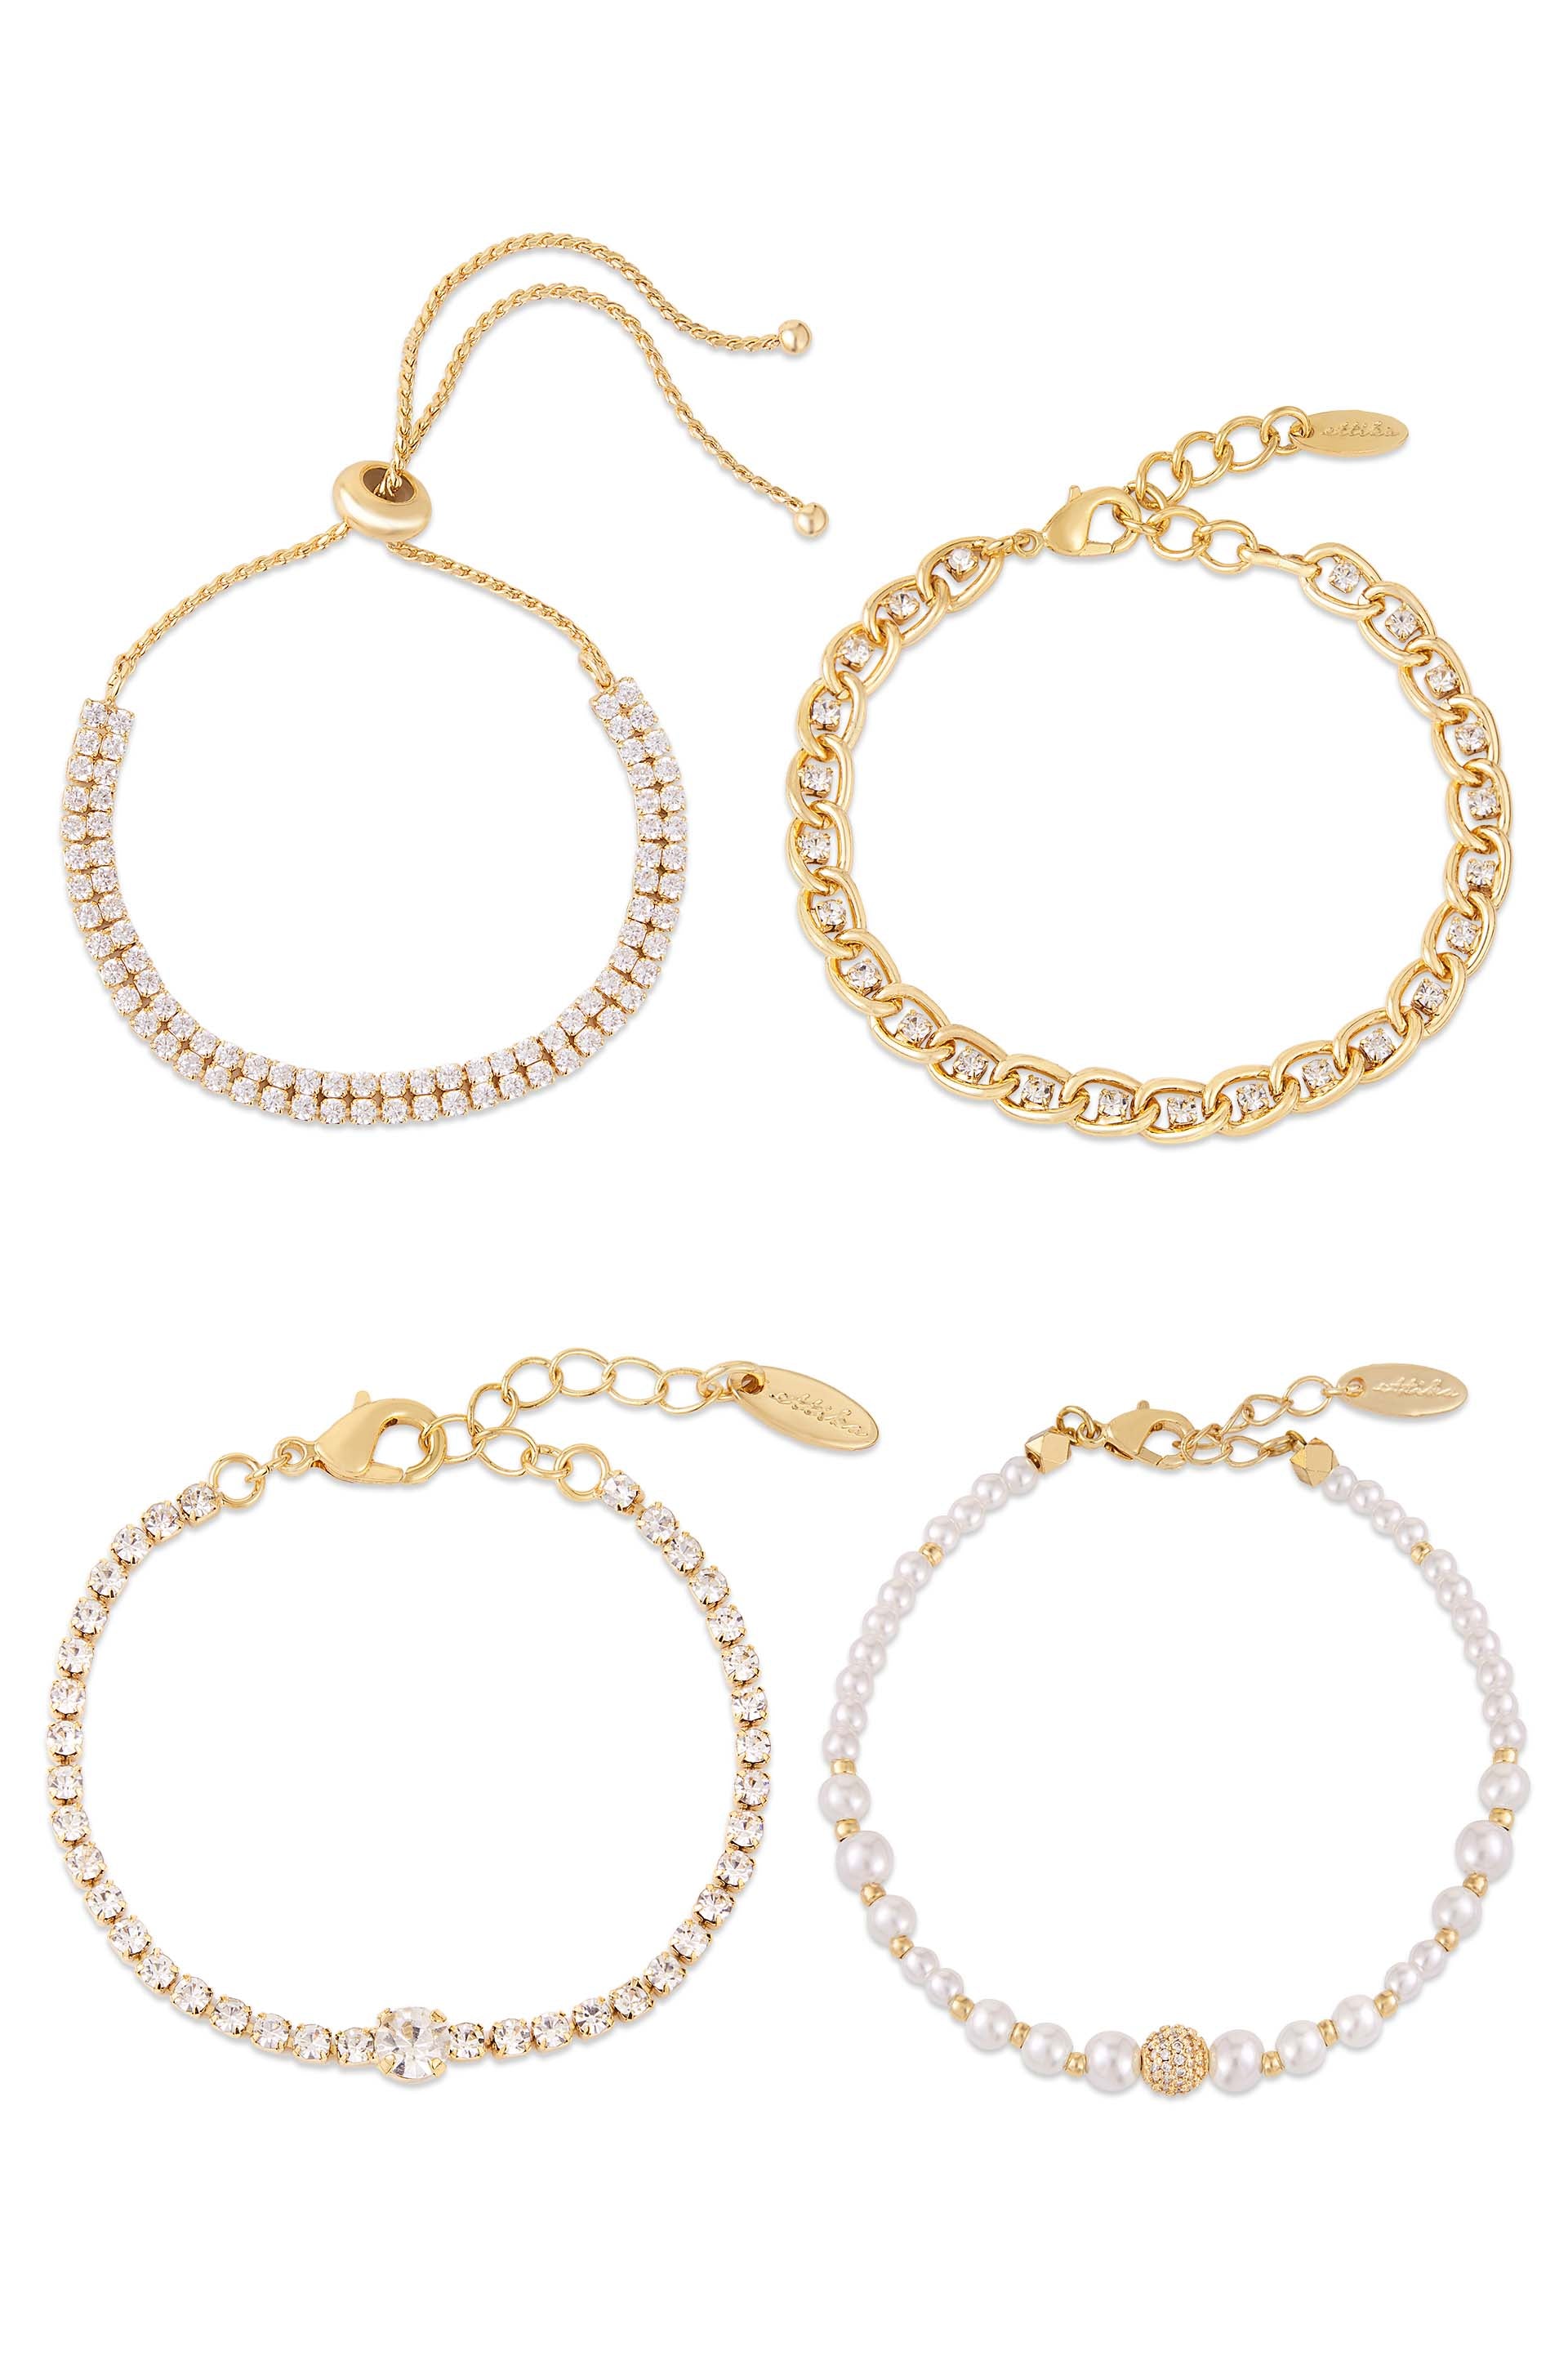 Gold Bracelet Stack for Woman / Gold Chain Bracelet / 18k Gold 